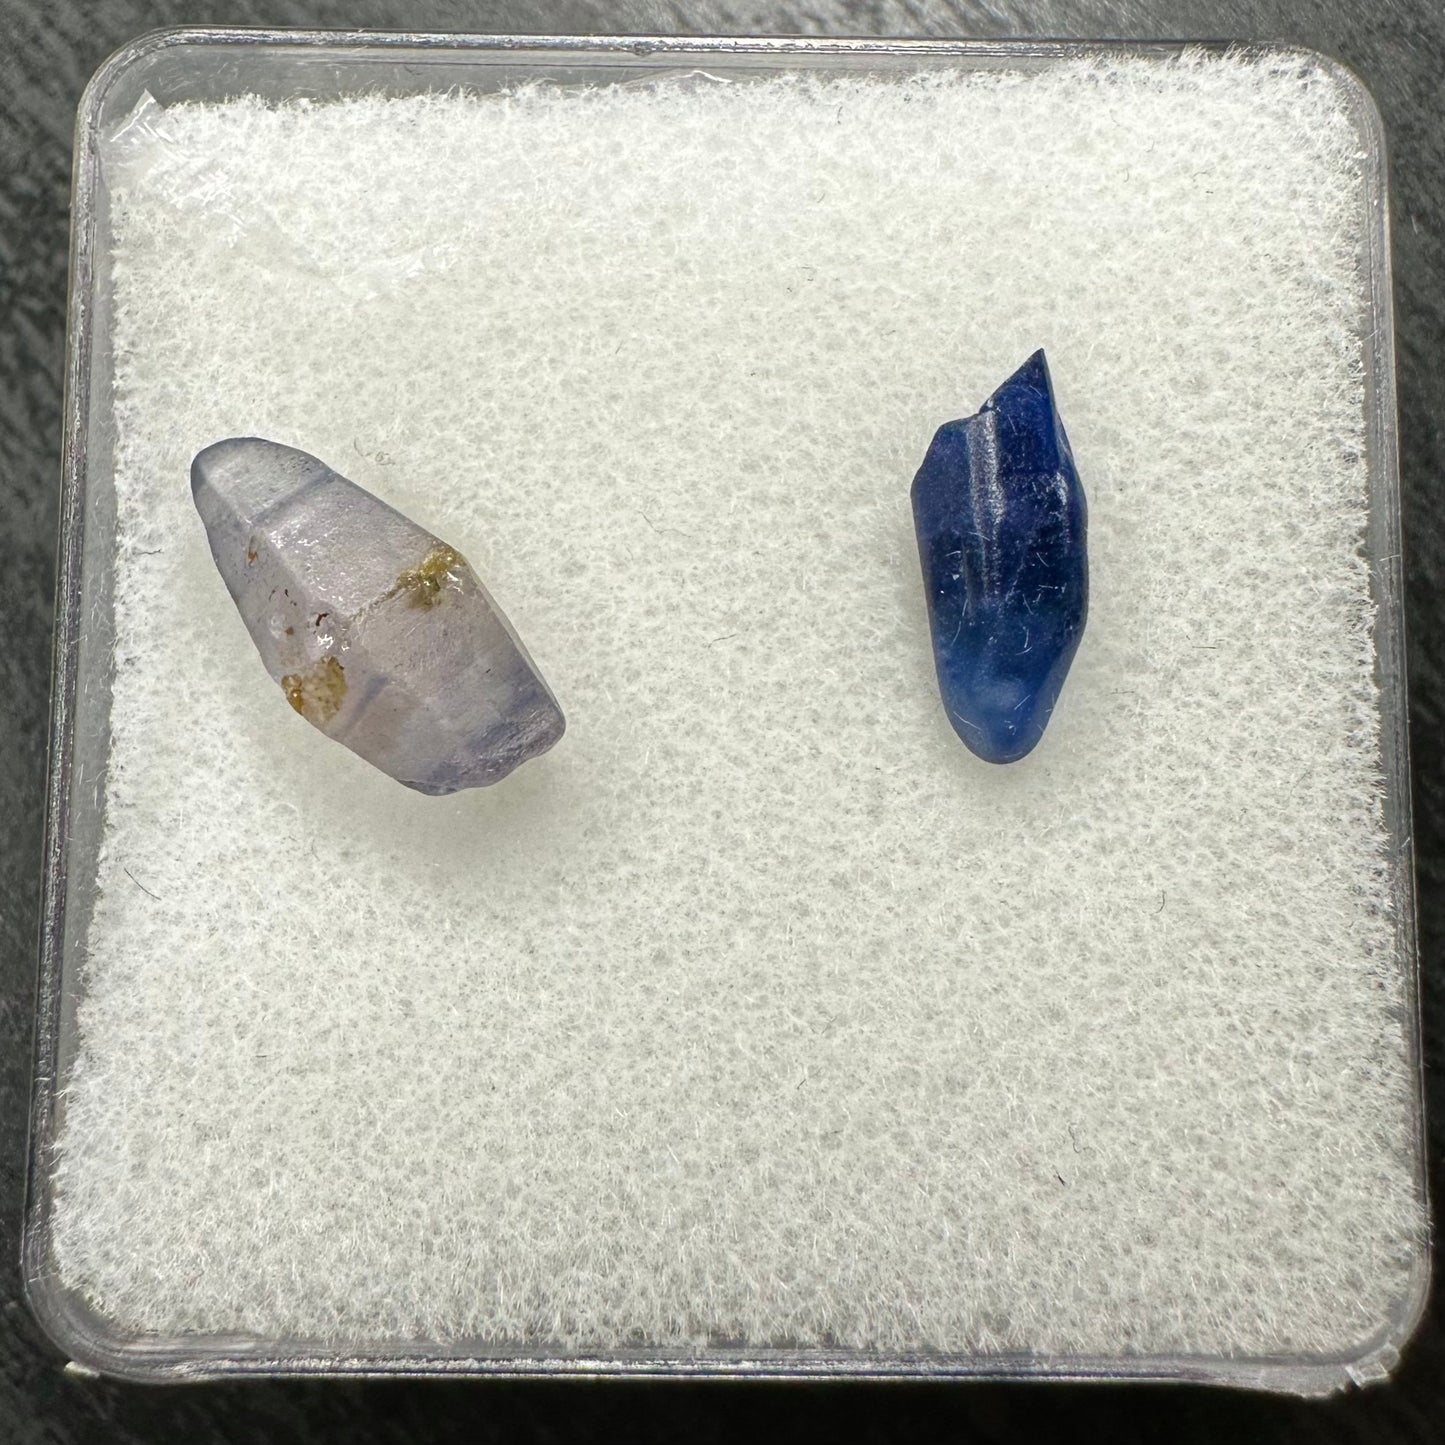 Sri Lankan Rough Sapphire crystals  showing heat vs. no heat treatment.